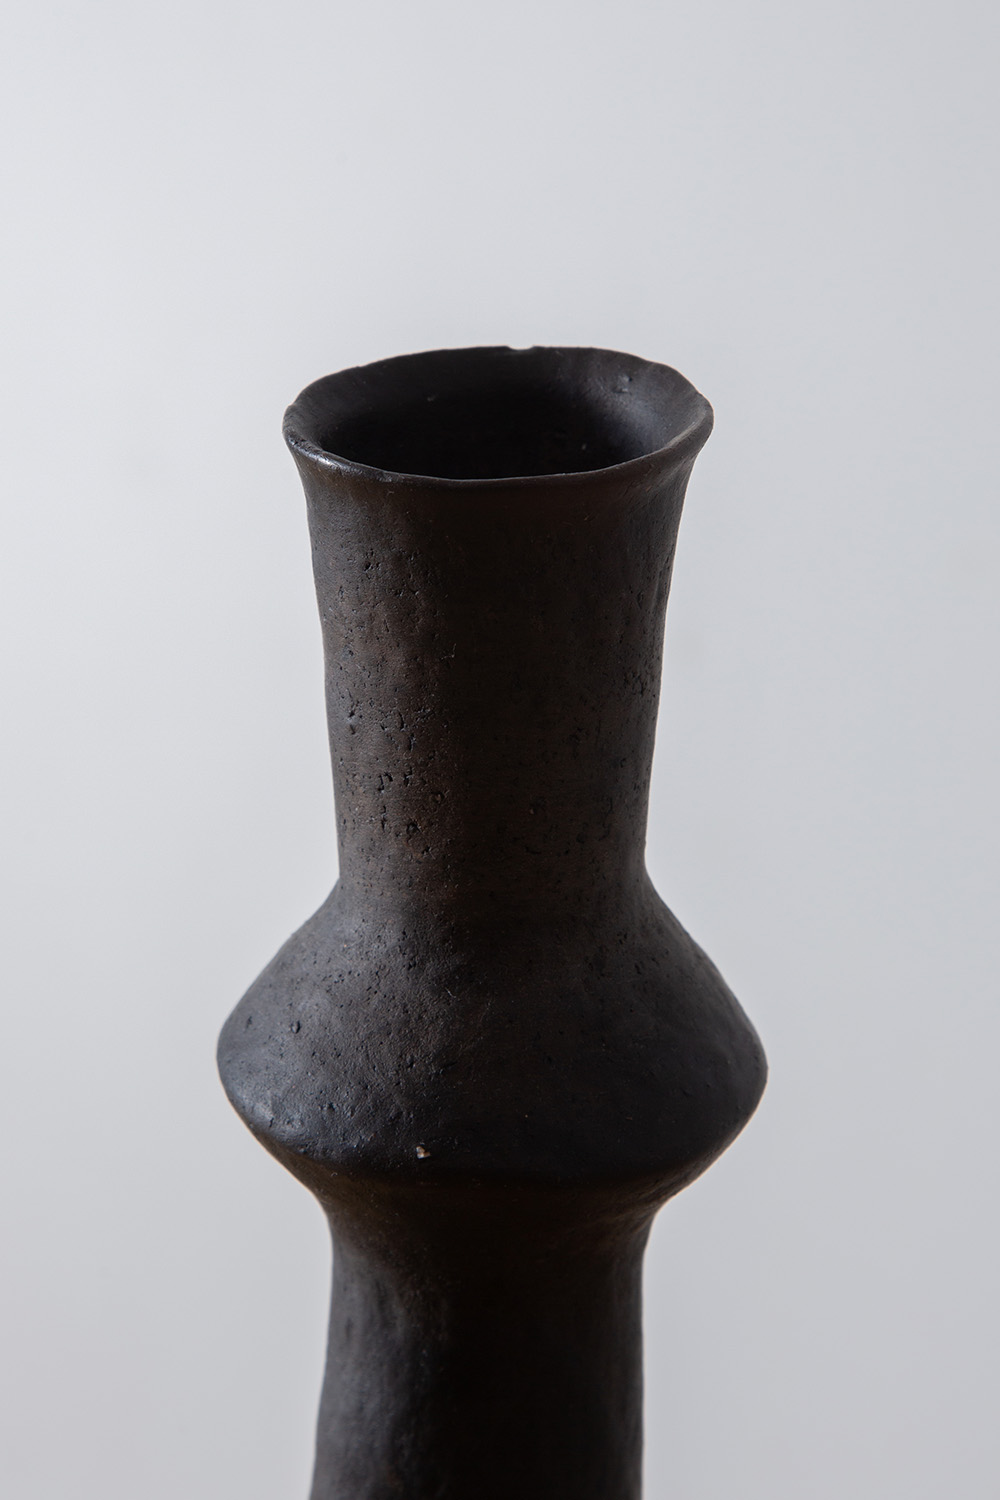 Large “Noyaki” Flower Vase #015 by Taro Tanaka in Black